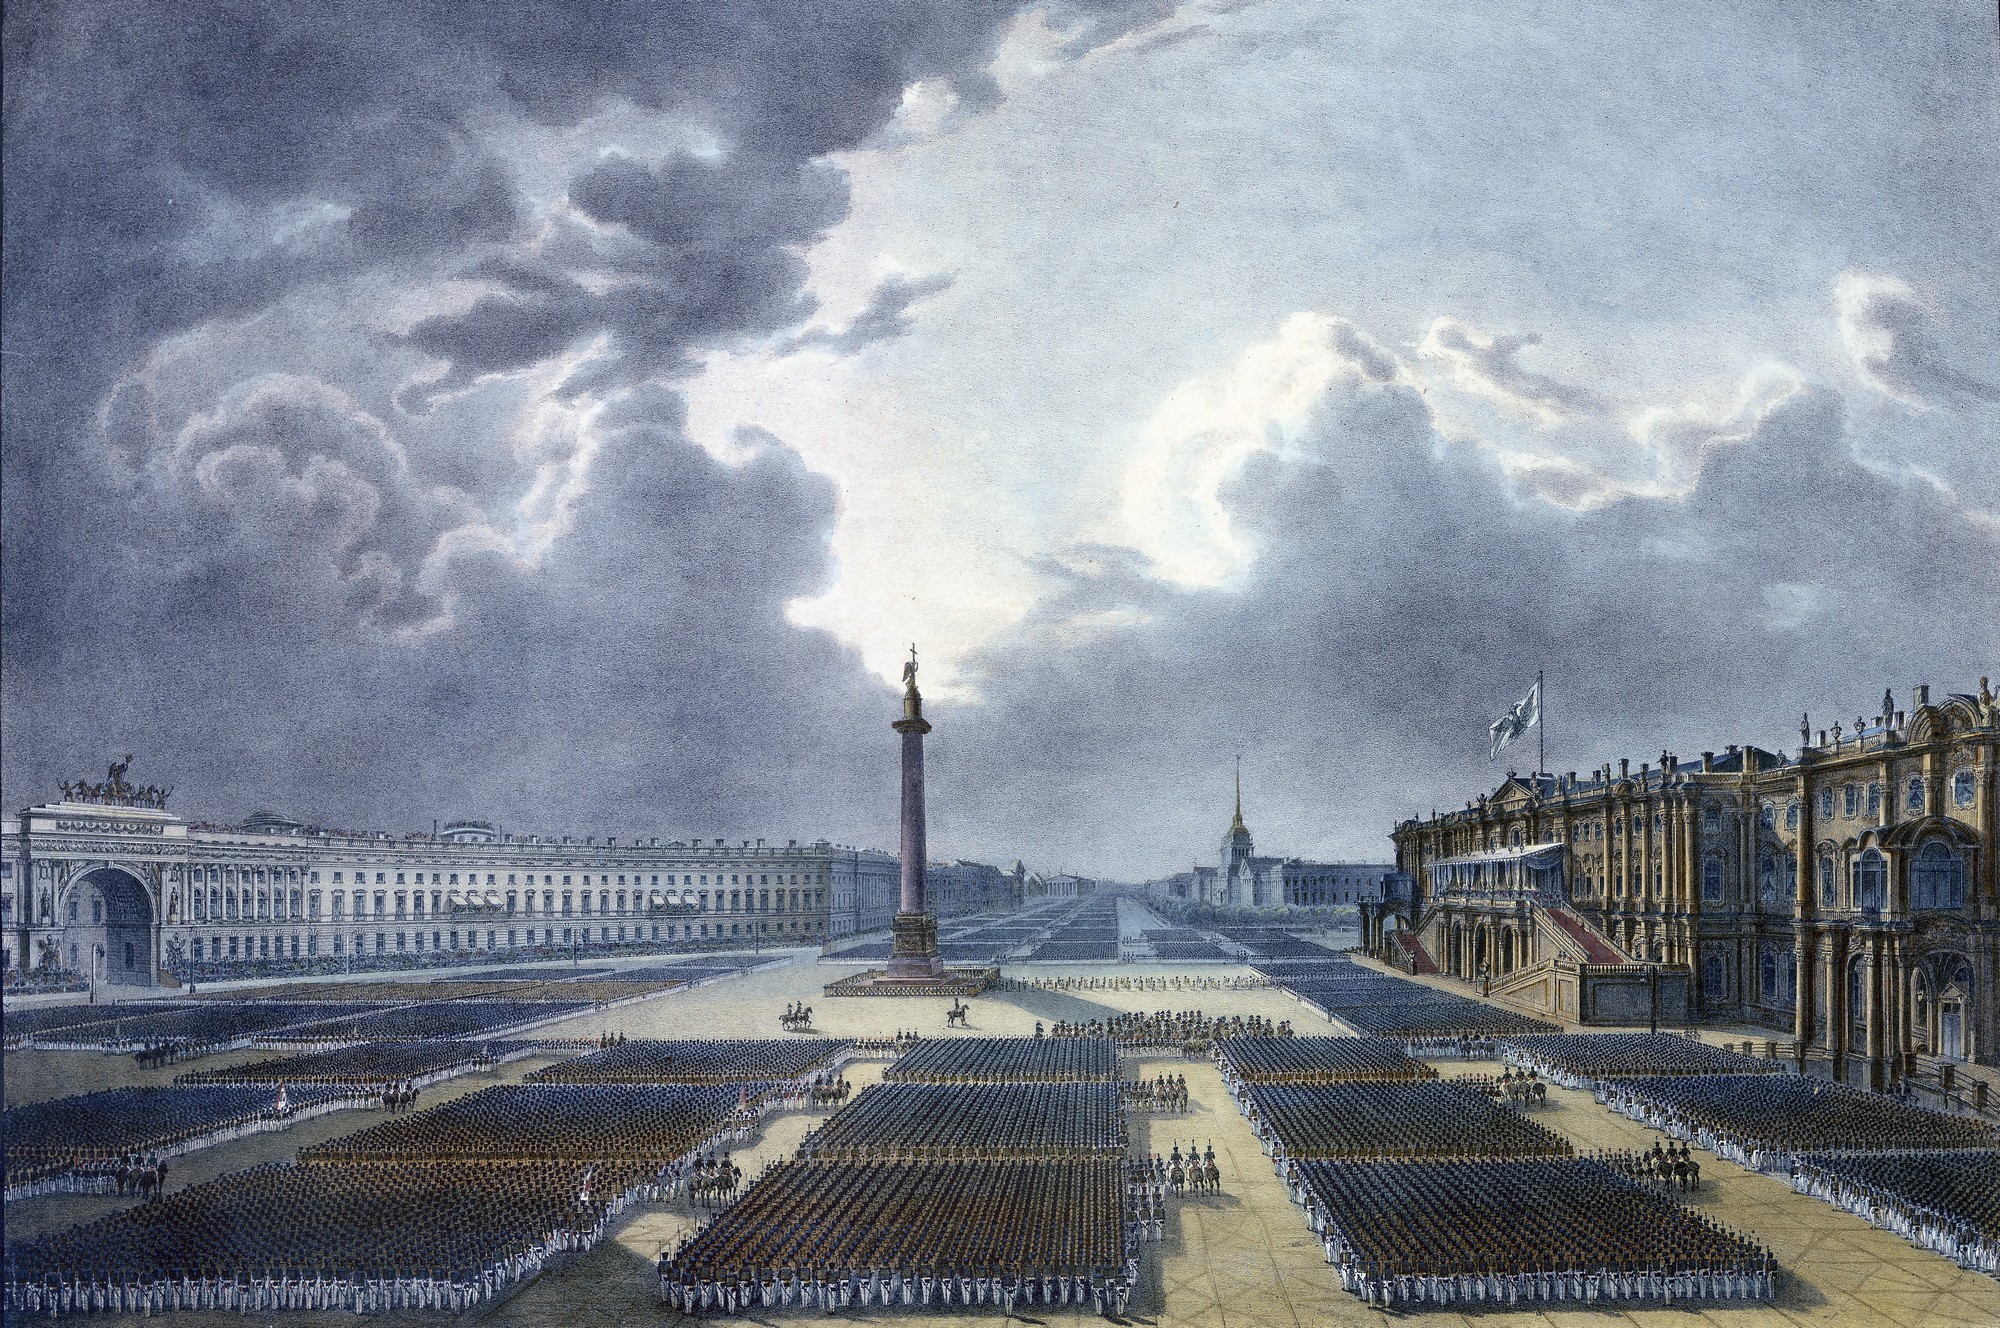 Александровская колонна. Монферран. 1834